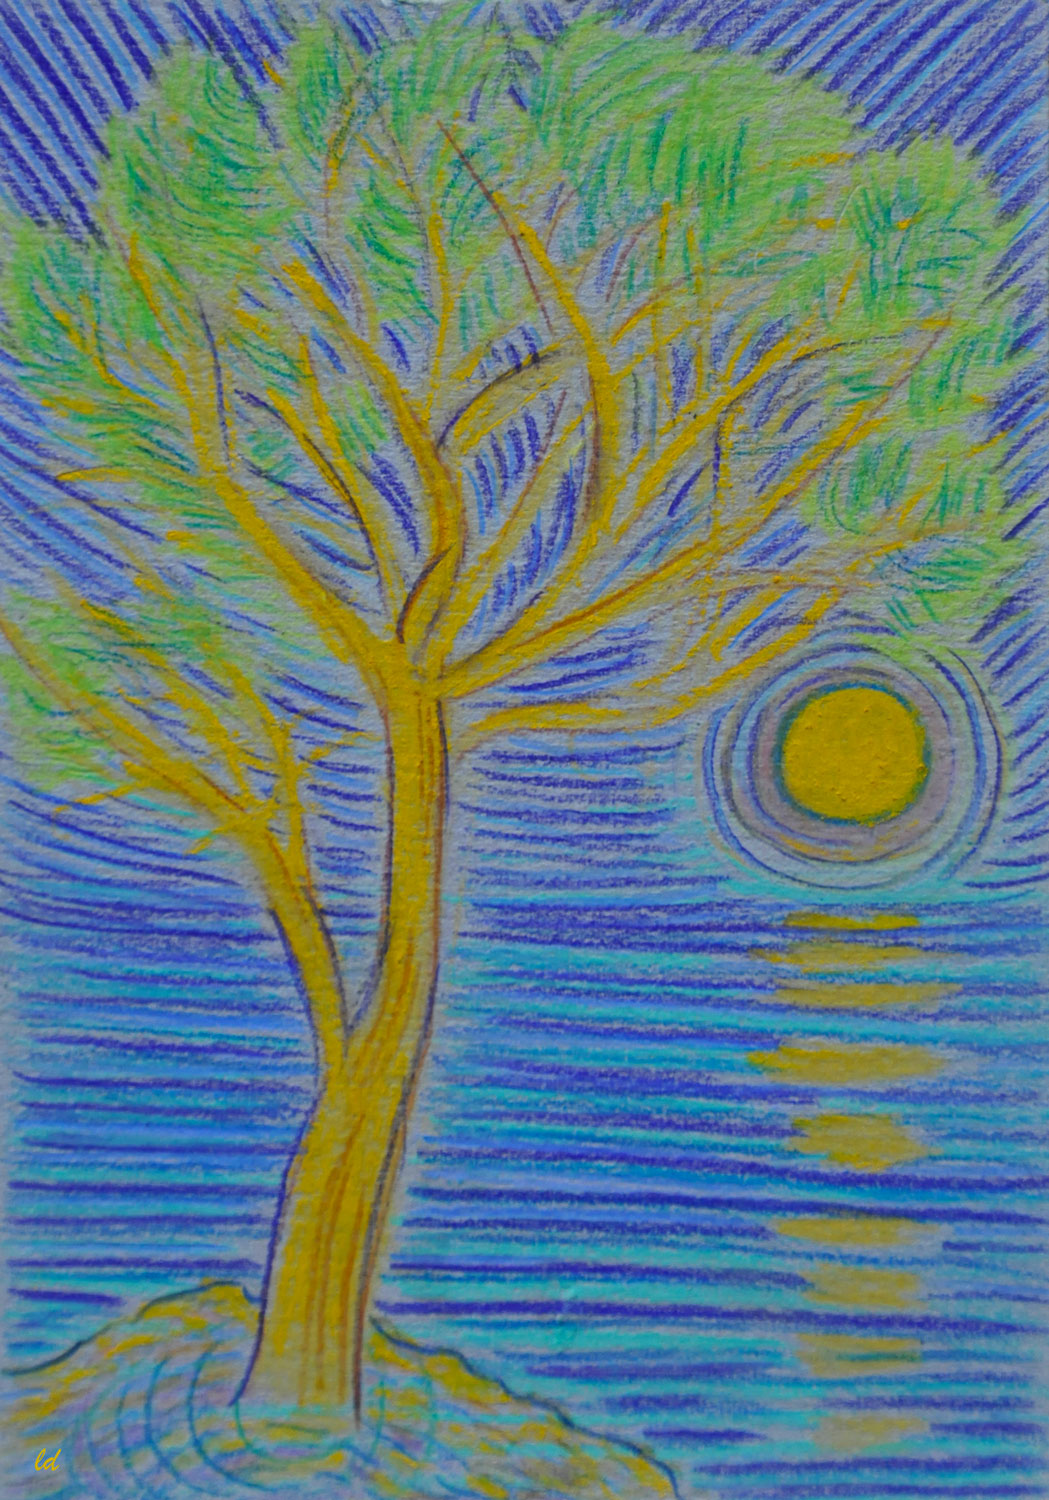 Cala Gonone 15, il pino sulla spiaggia. Crayon de couleur et pastel tendre sur carton, 21x15. 2021